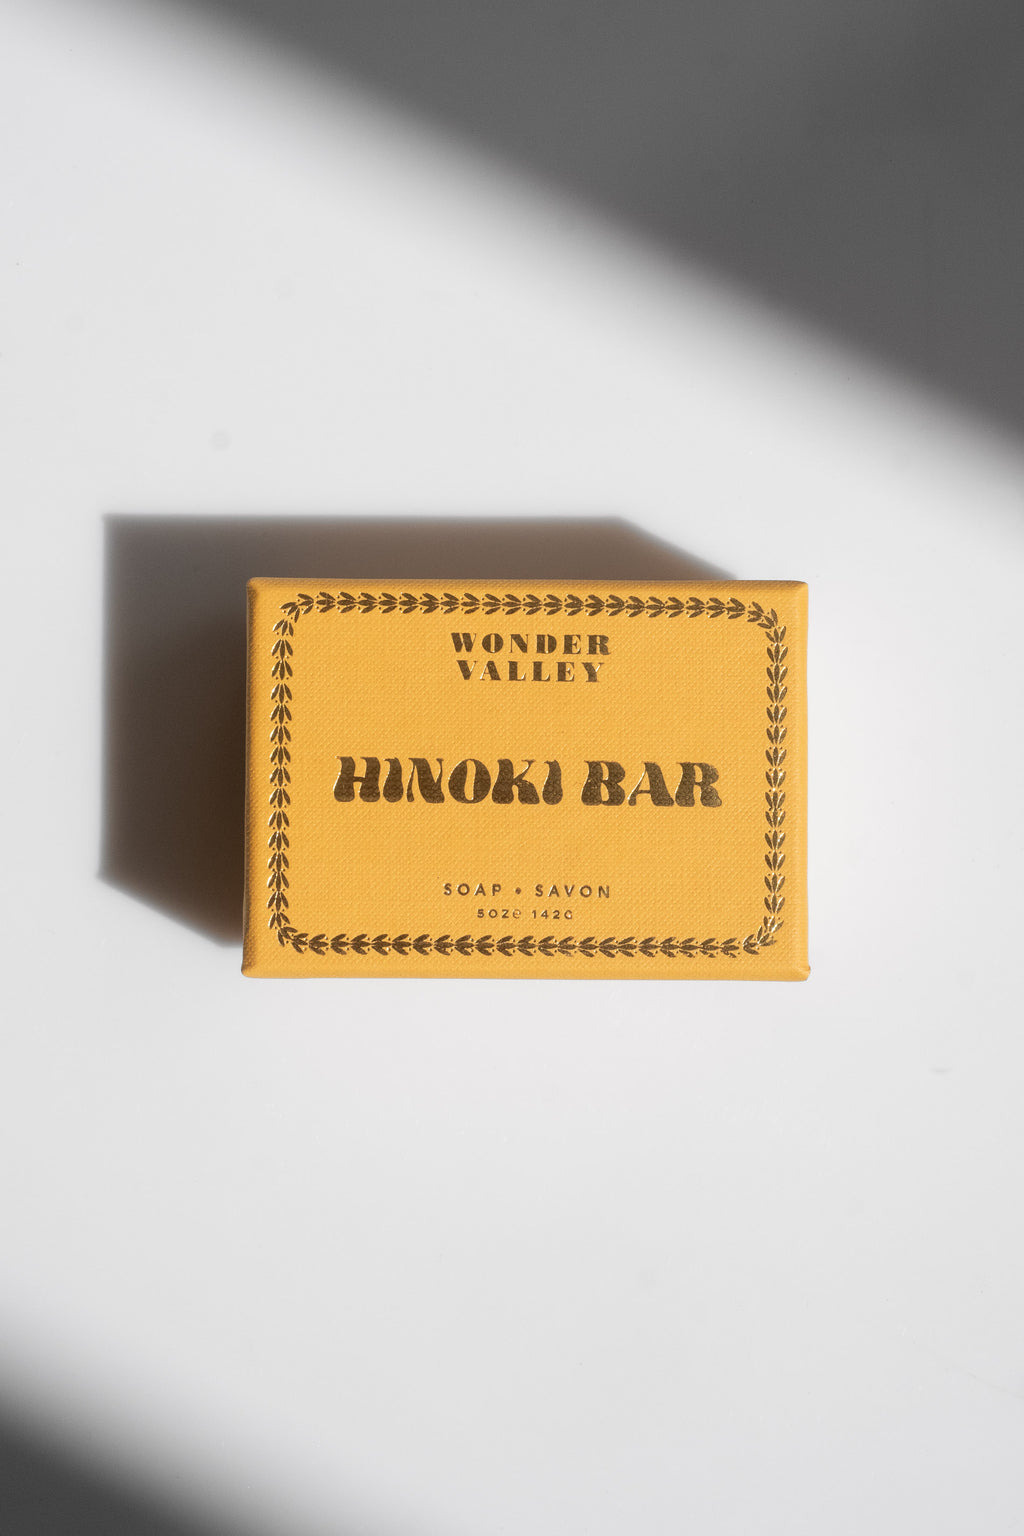 Wonder Valley Hinoki Oil Bar Soap